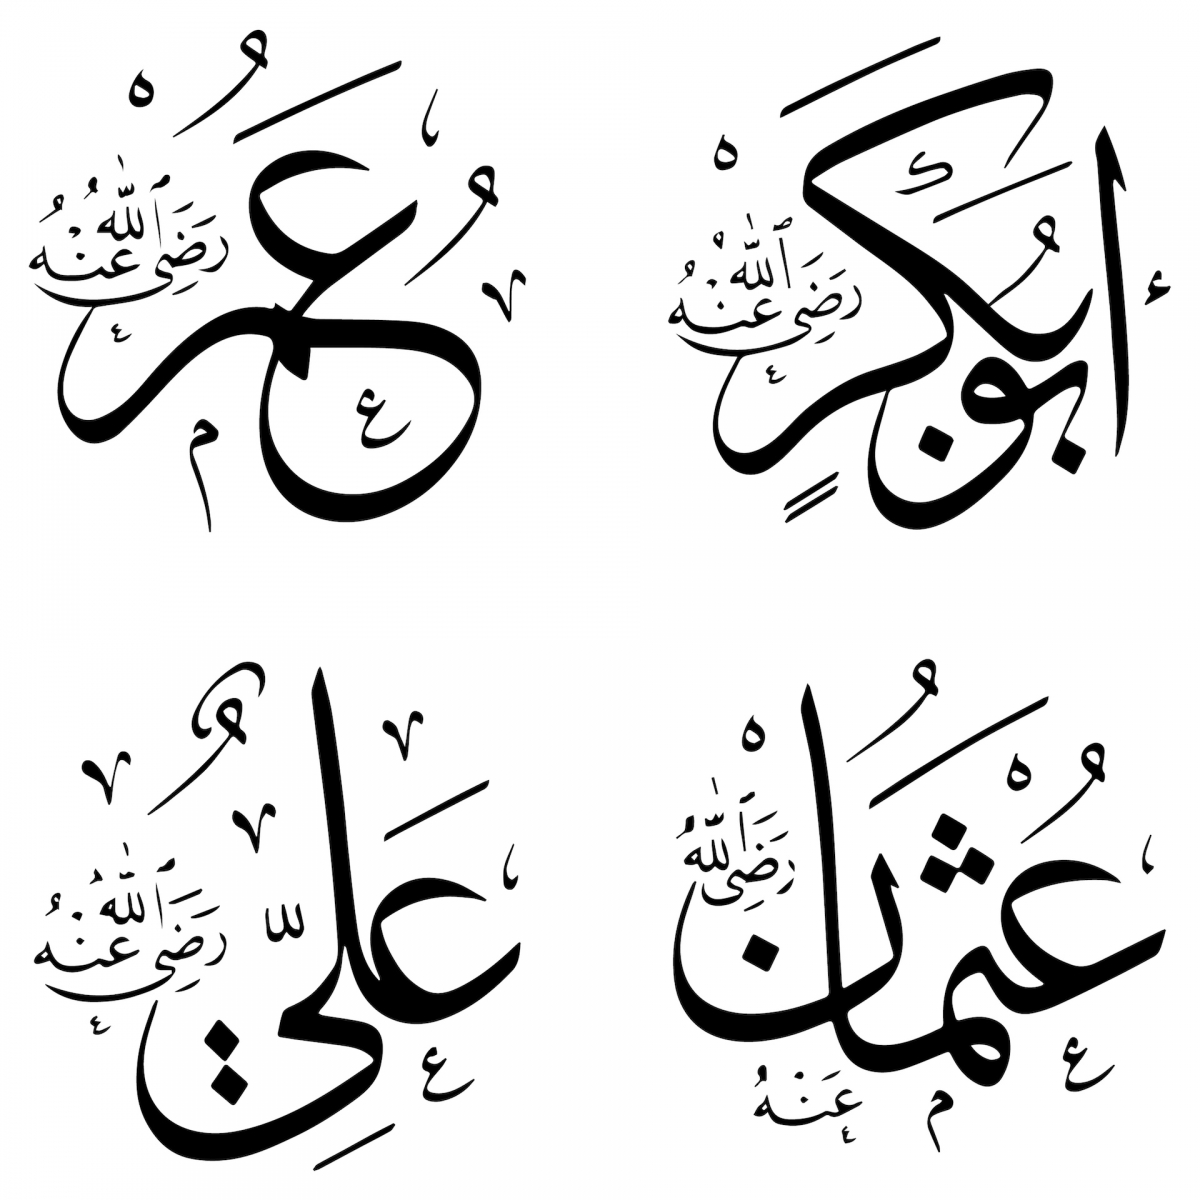 The Rashidun Caliphs's names in Islamic Inscription. Ebu Bekir, Omer, Osman and Ali. 4 rashidun caliphs's name plates decorates any religious buildings in Islamic World